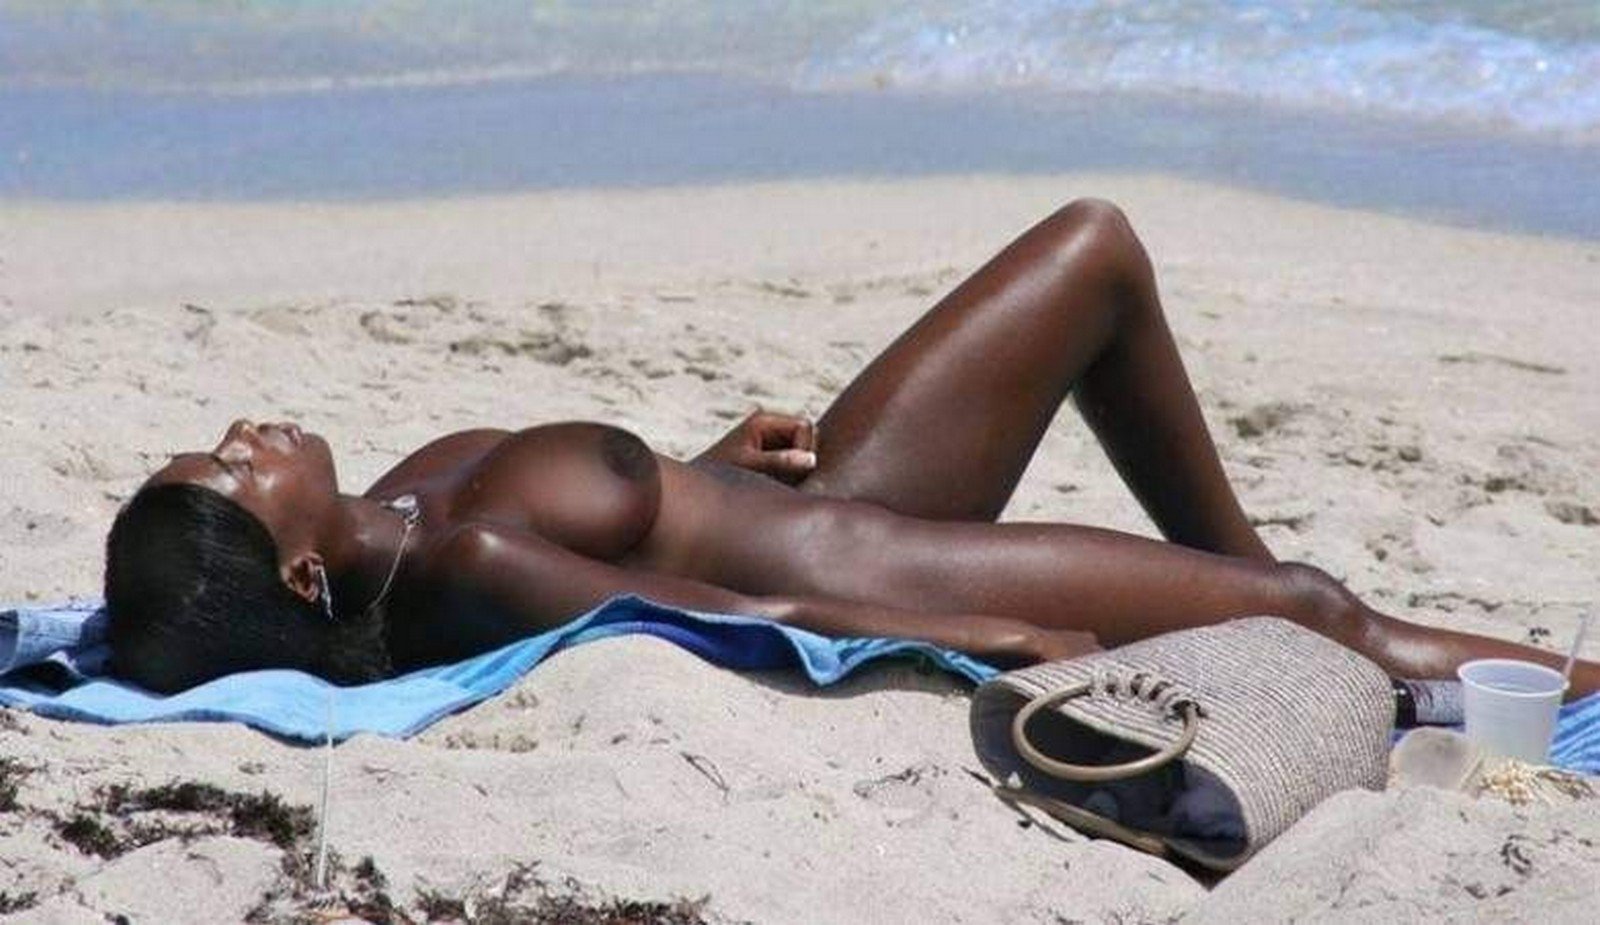 Jamaica women nudes images